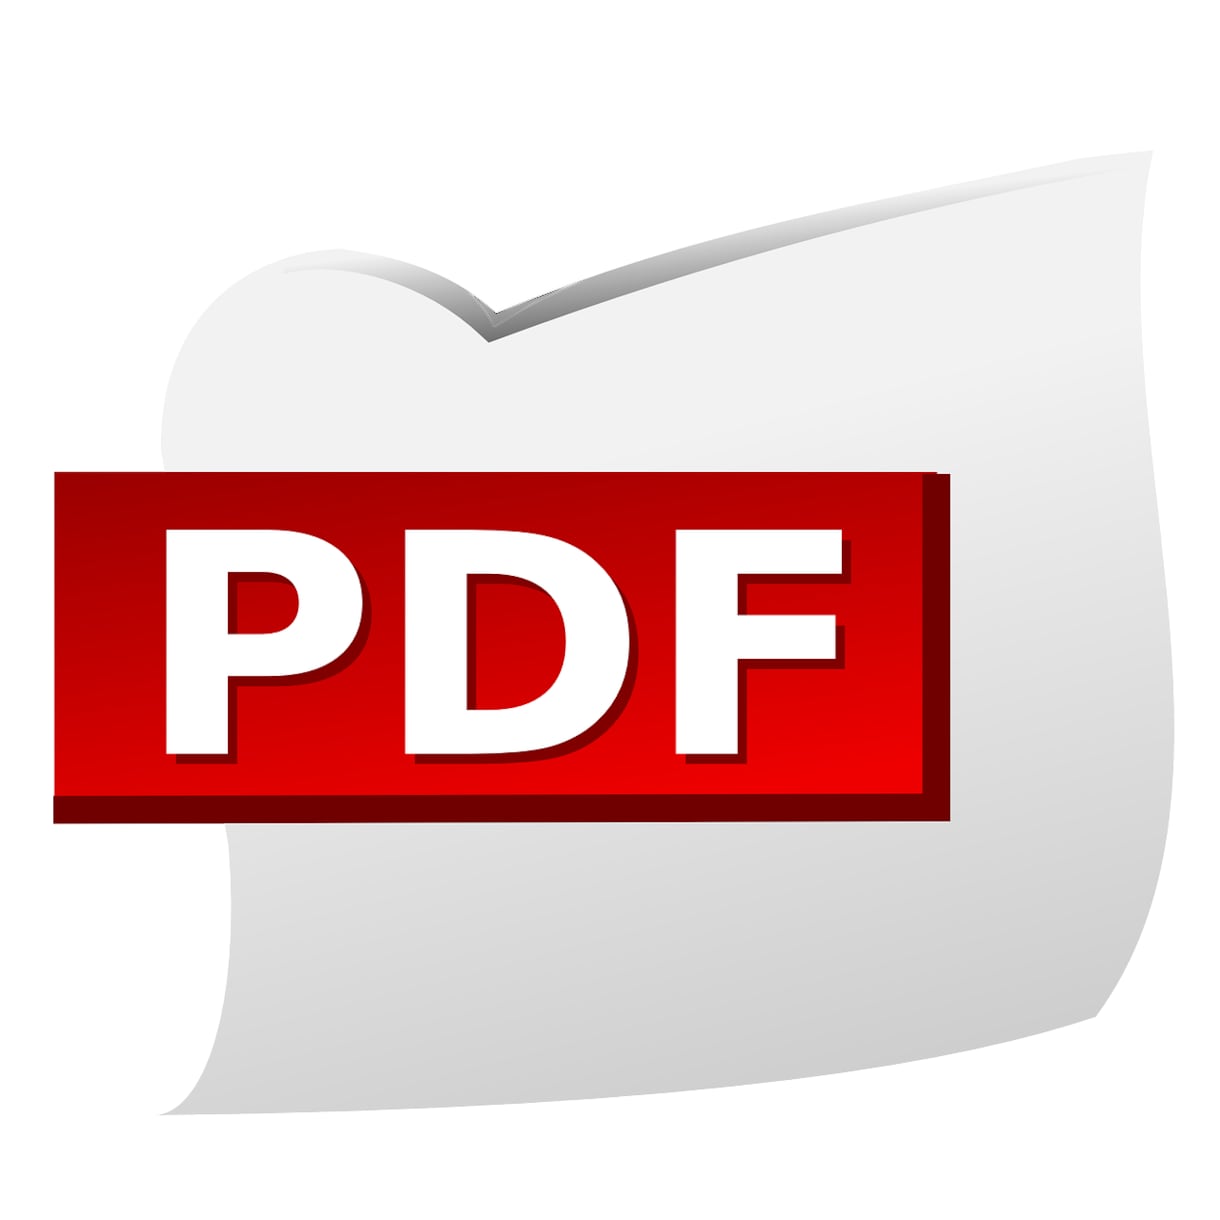 PDFを分割・統合します 素早く対応します！短納期も是非ご相談下さい！ イメージ1